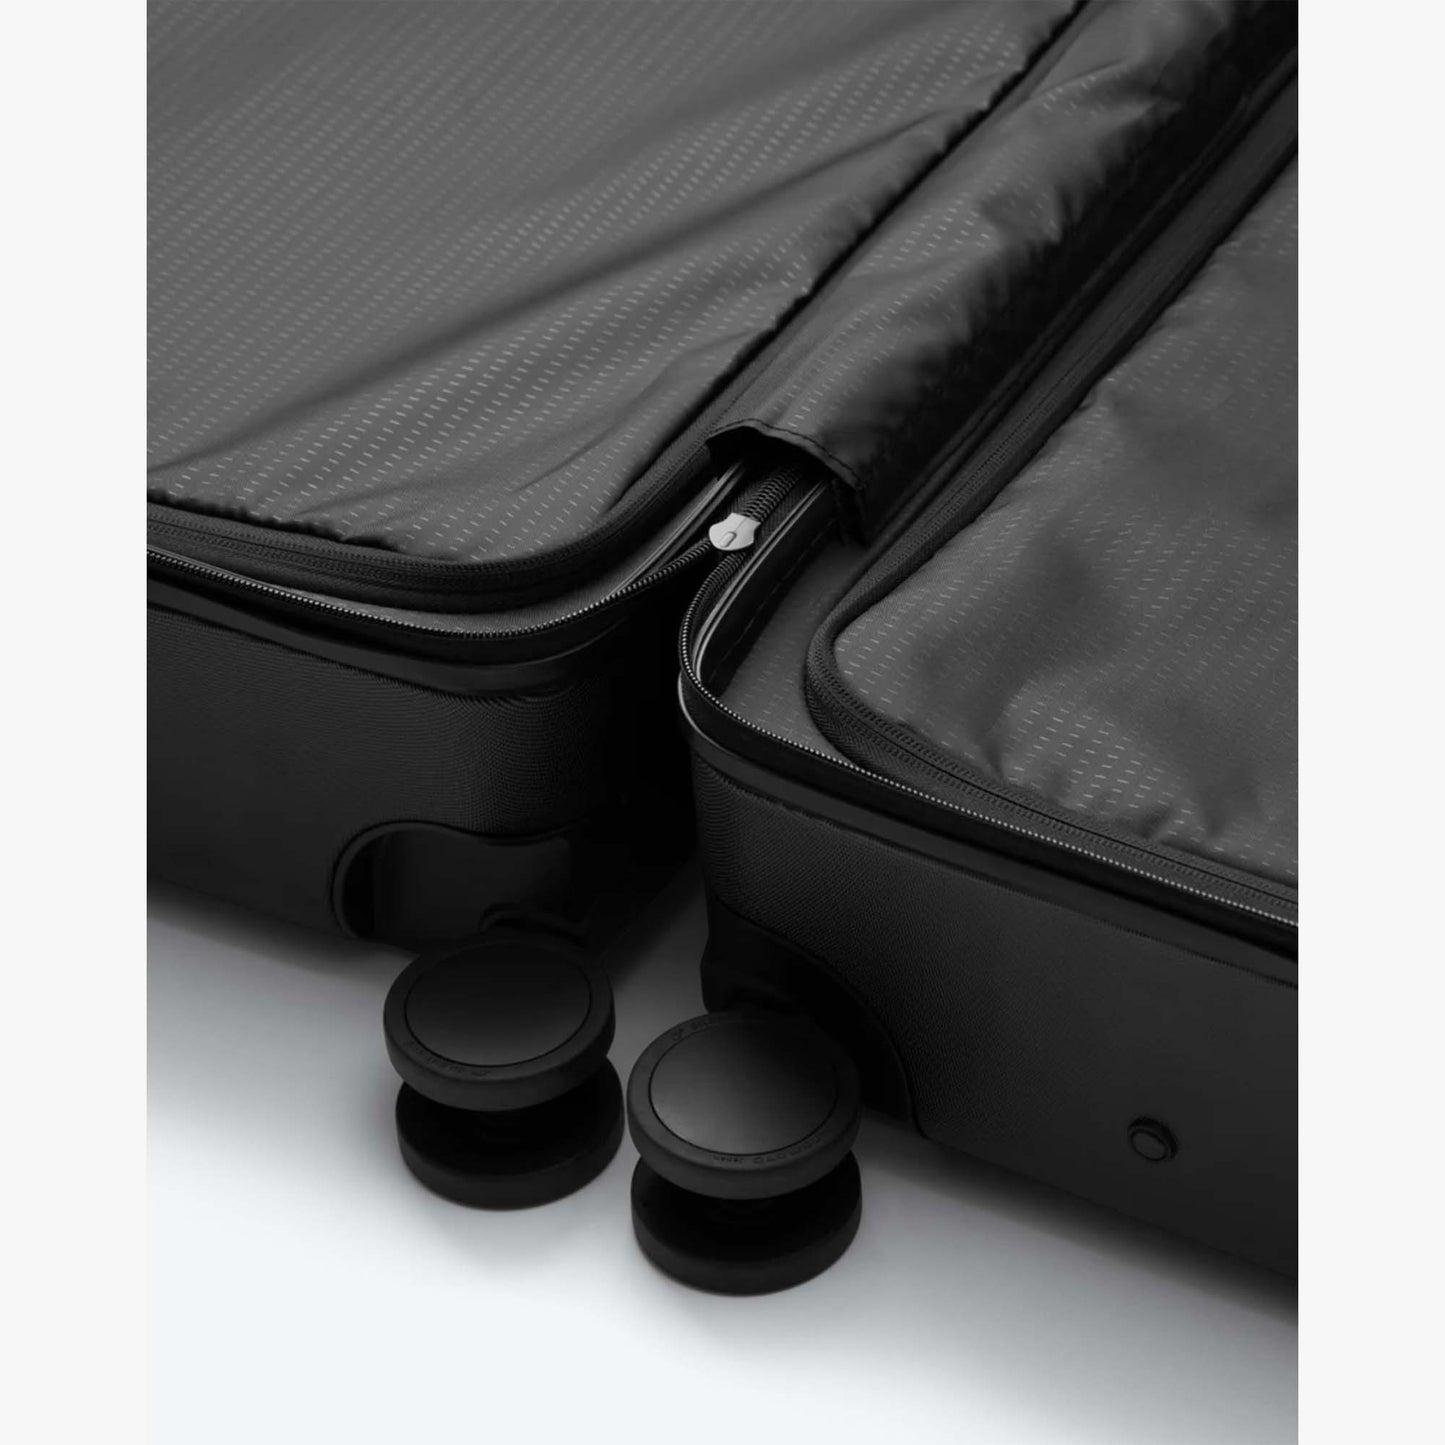 DB Journey Ramverk Pro Carry-On Luggage Green Ray